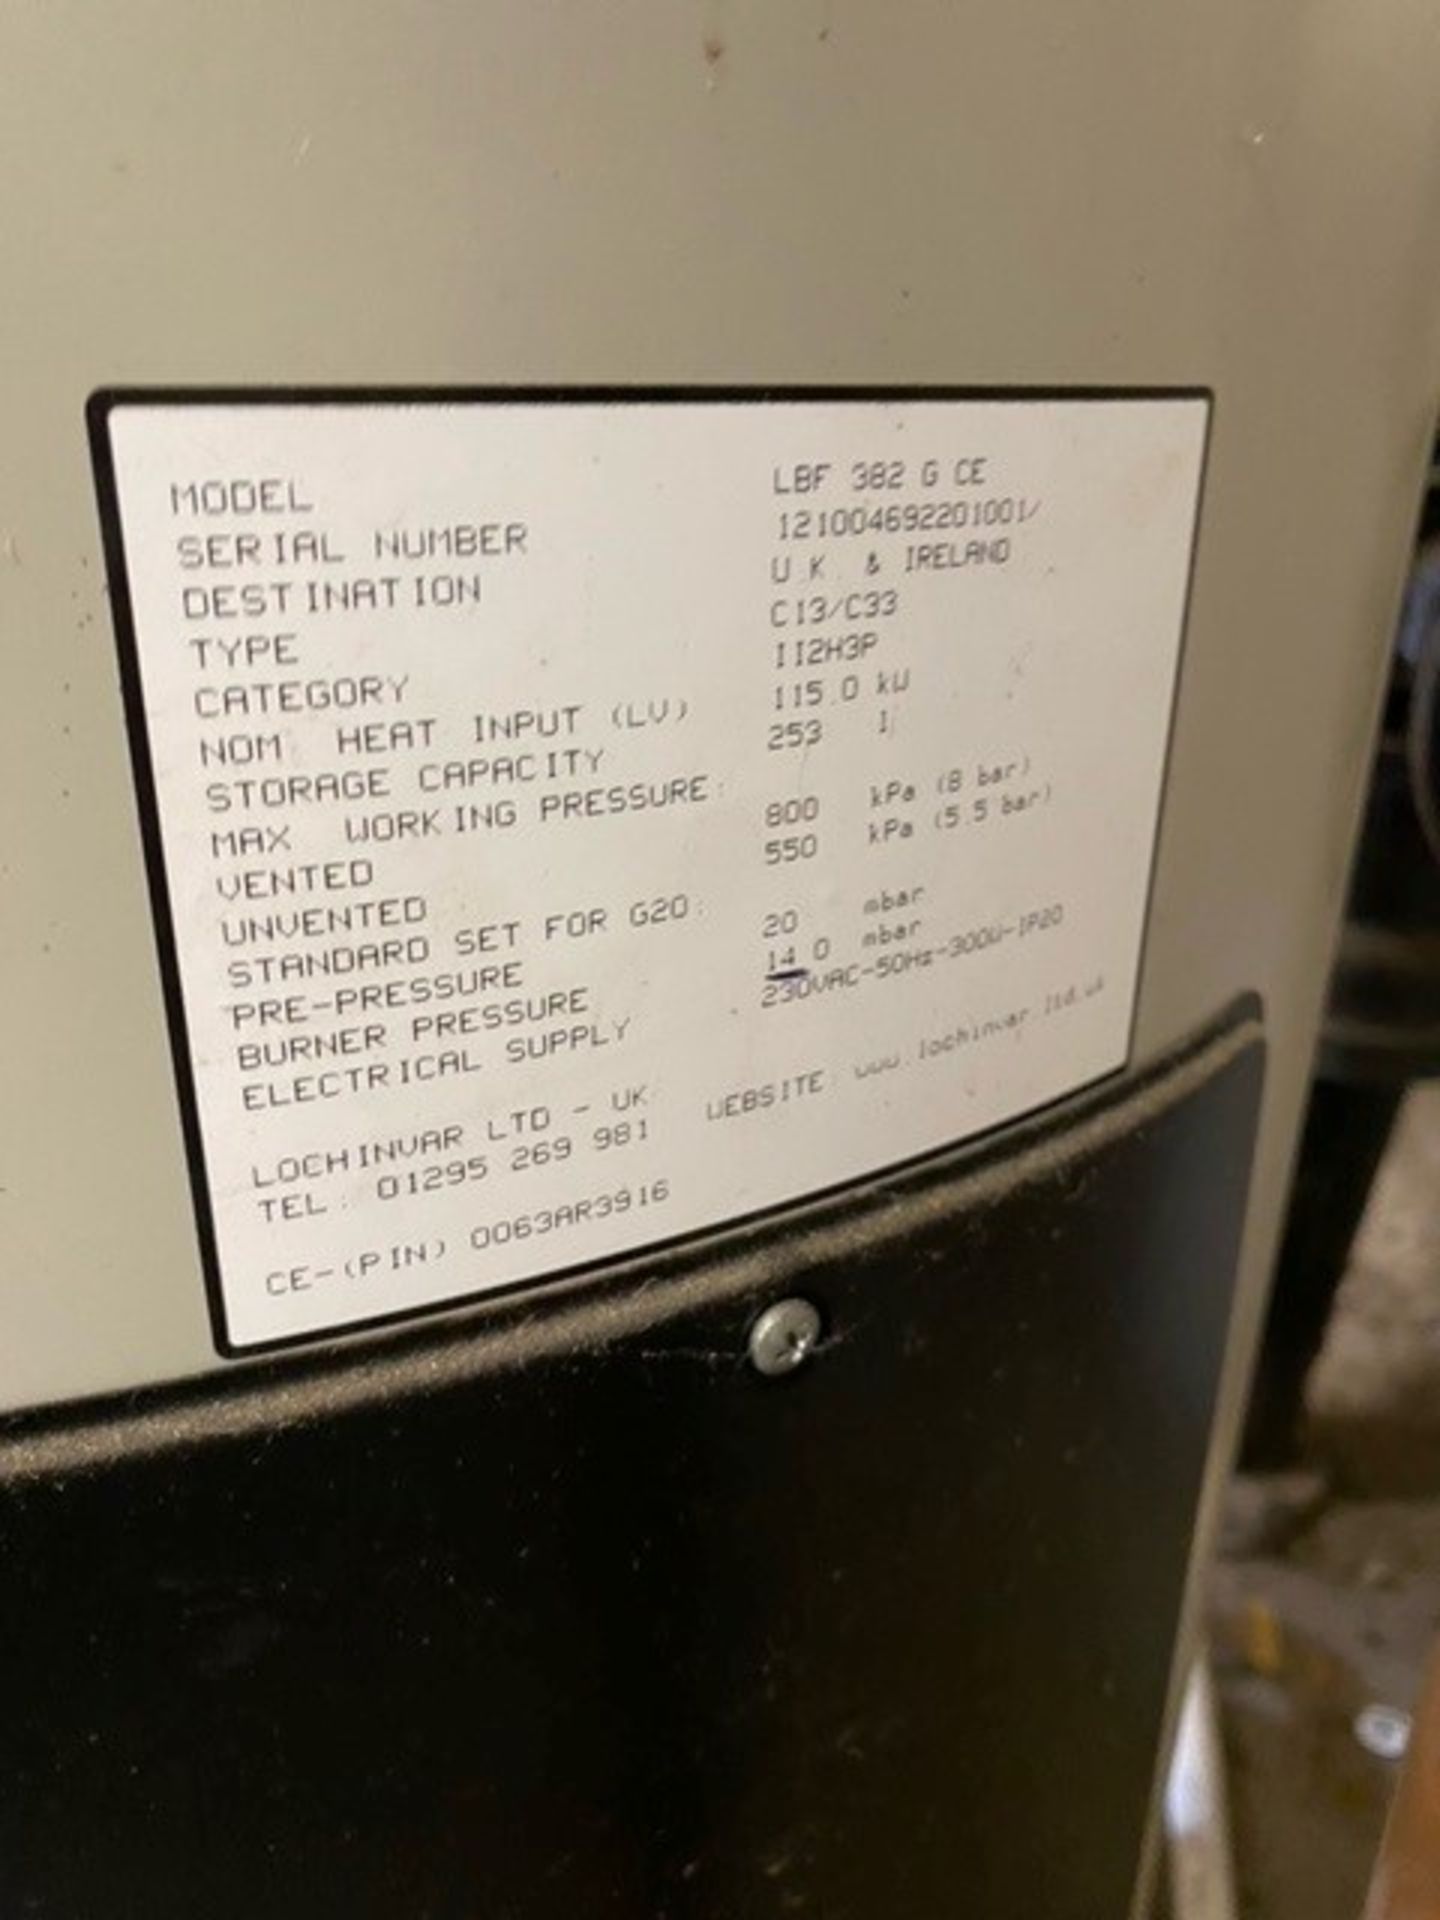 Lochinvar LBF382 G CE Calorifier Gas Fired Water Heater - Image 2 of 2